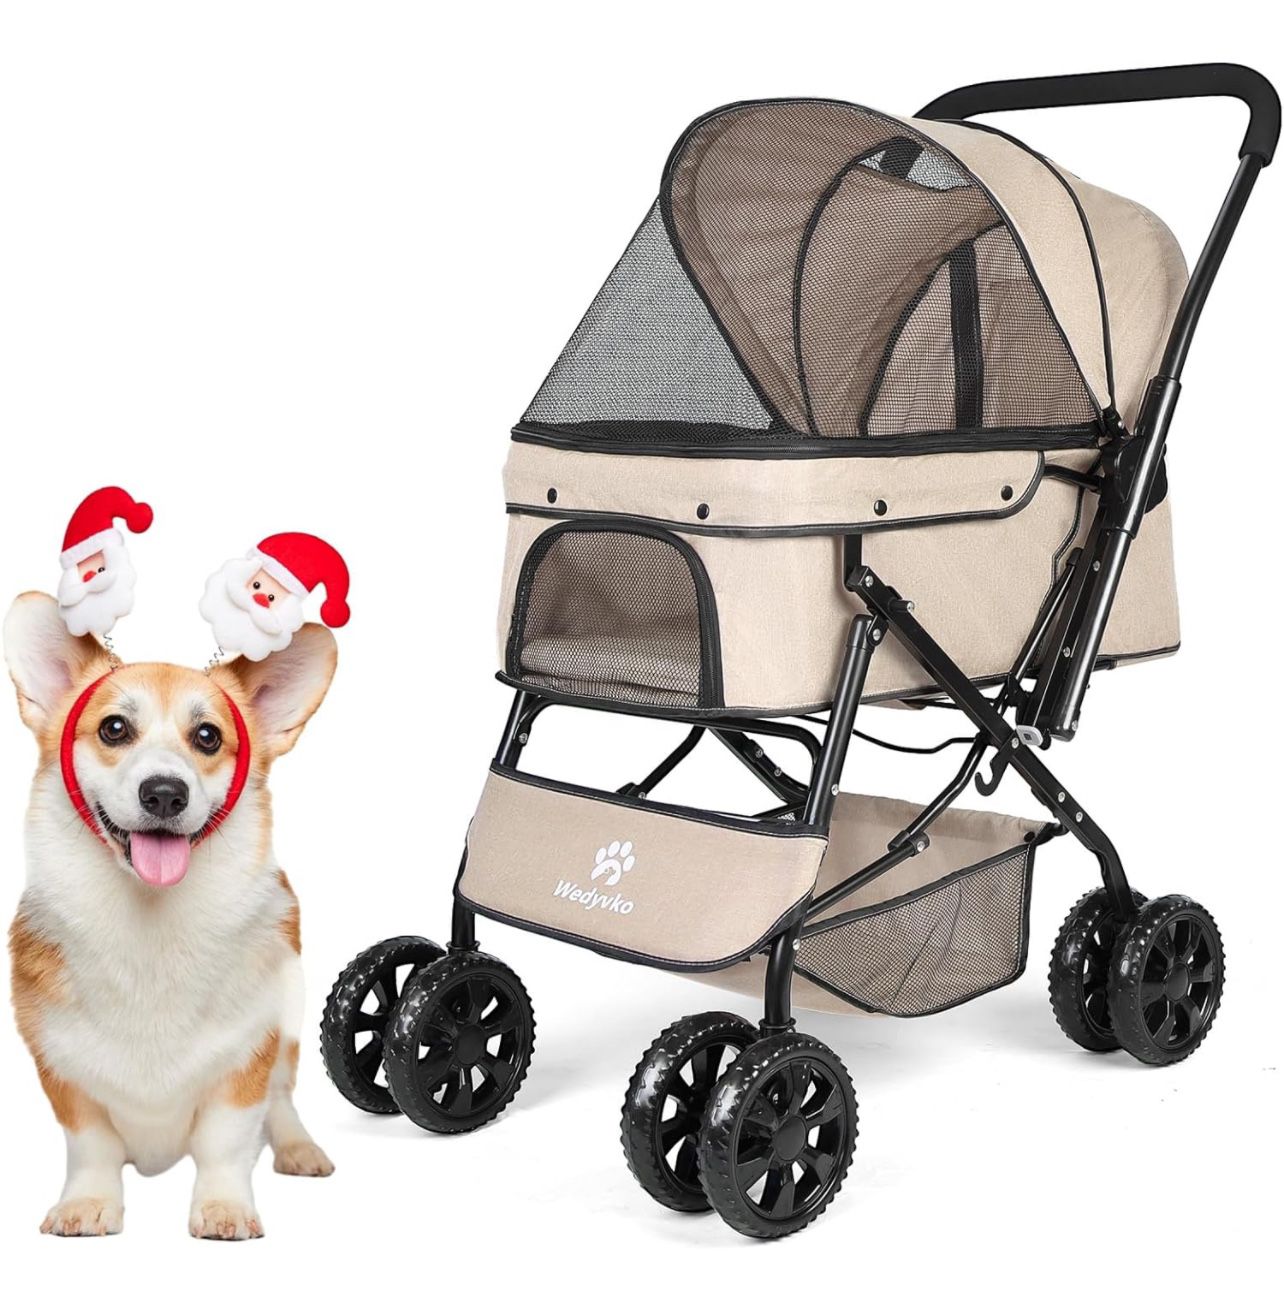 Medium Dog Stroller 50lb - Pets Stroller for Medium Dogs with Reversible Handlebar, 360 Front Wheel 2 Security Leashes Khaki